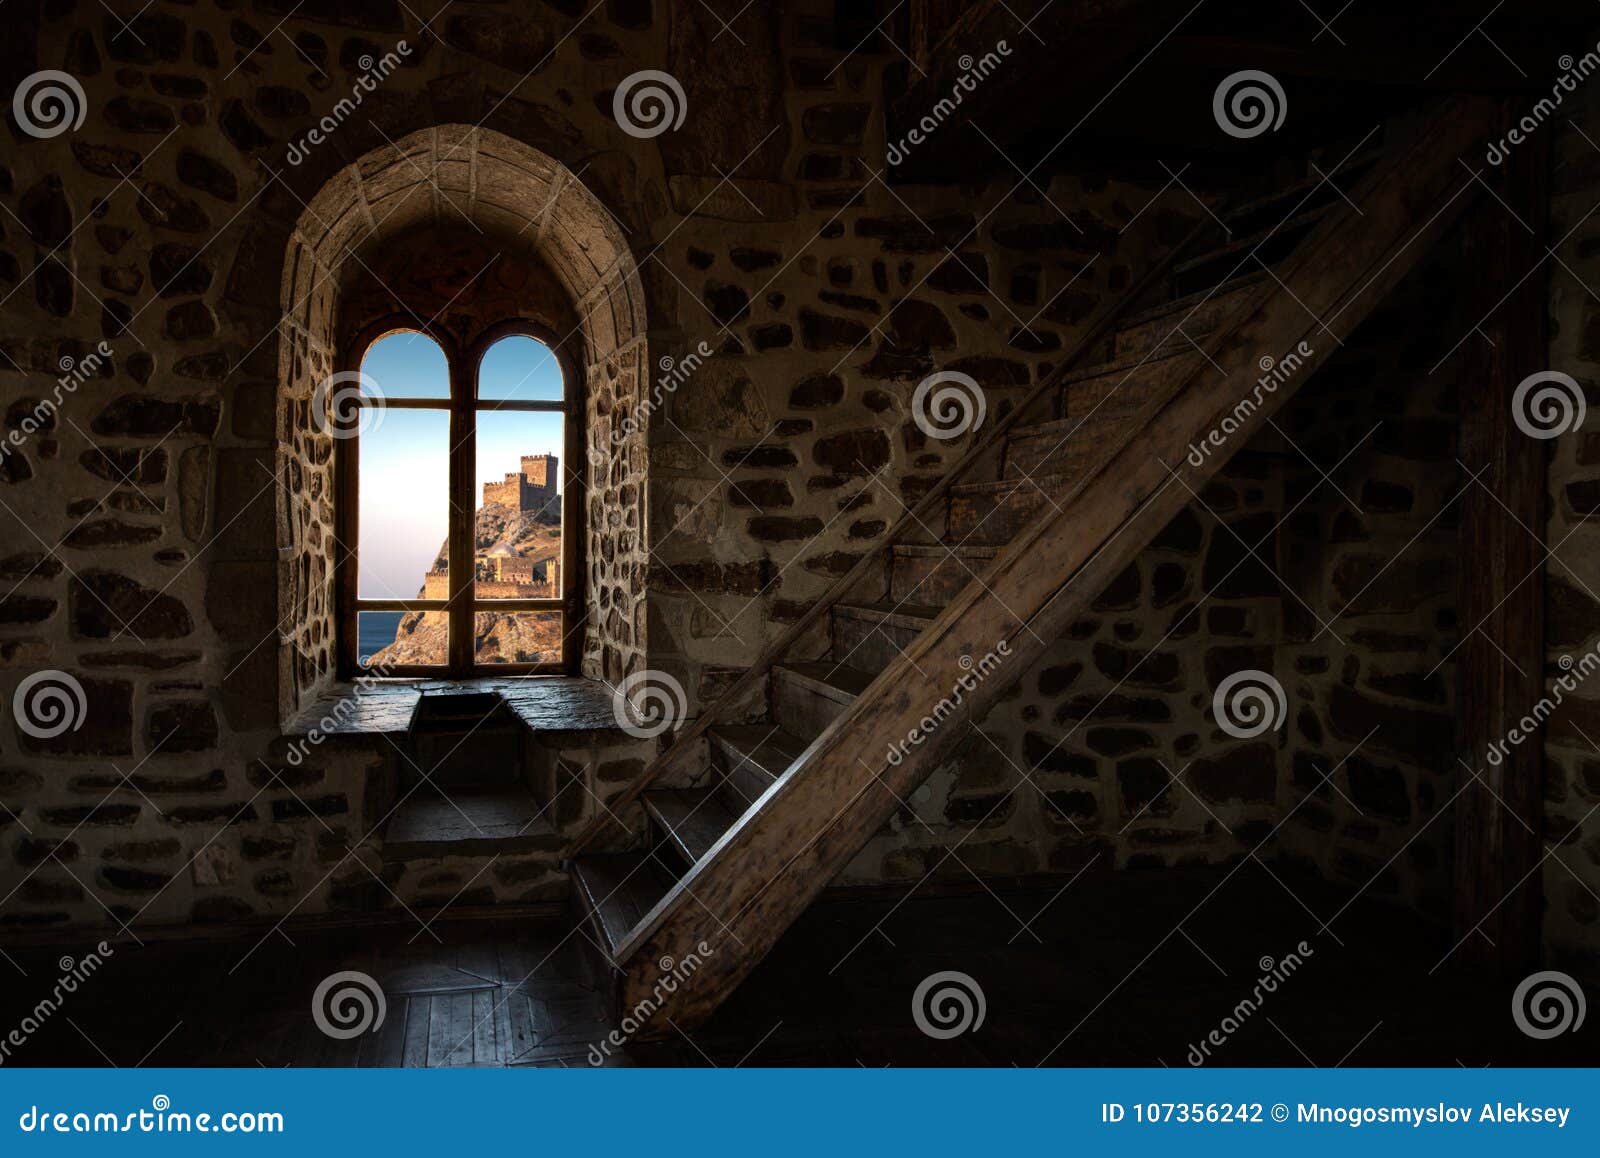 Inside Interior Room In Old Castle Stock Photo Image Of Ladder Castle